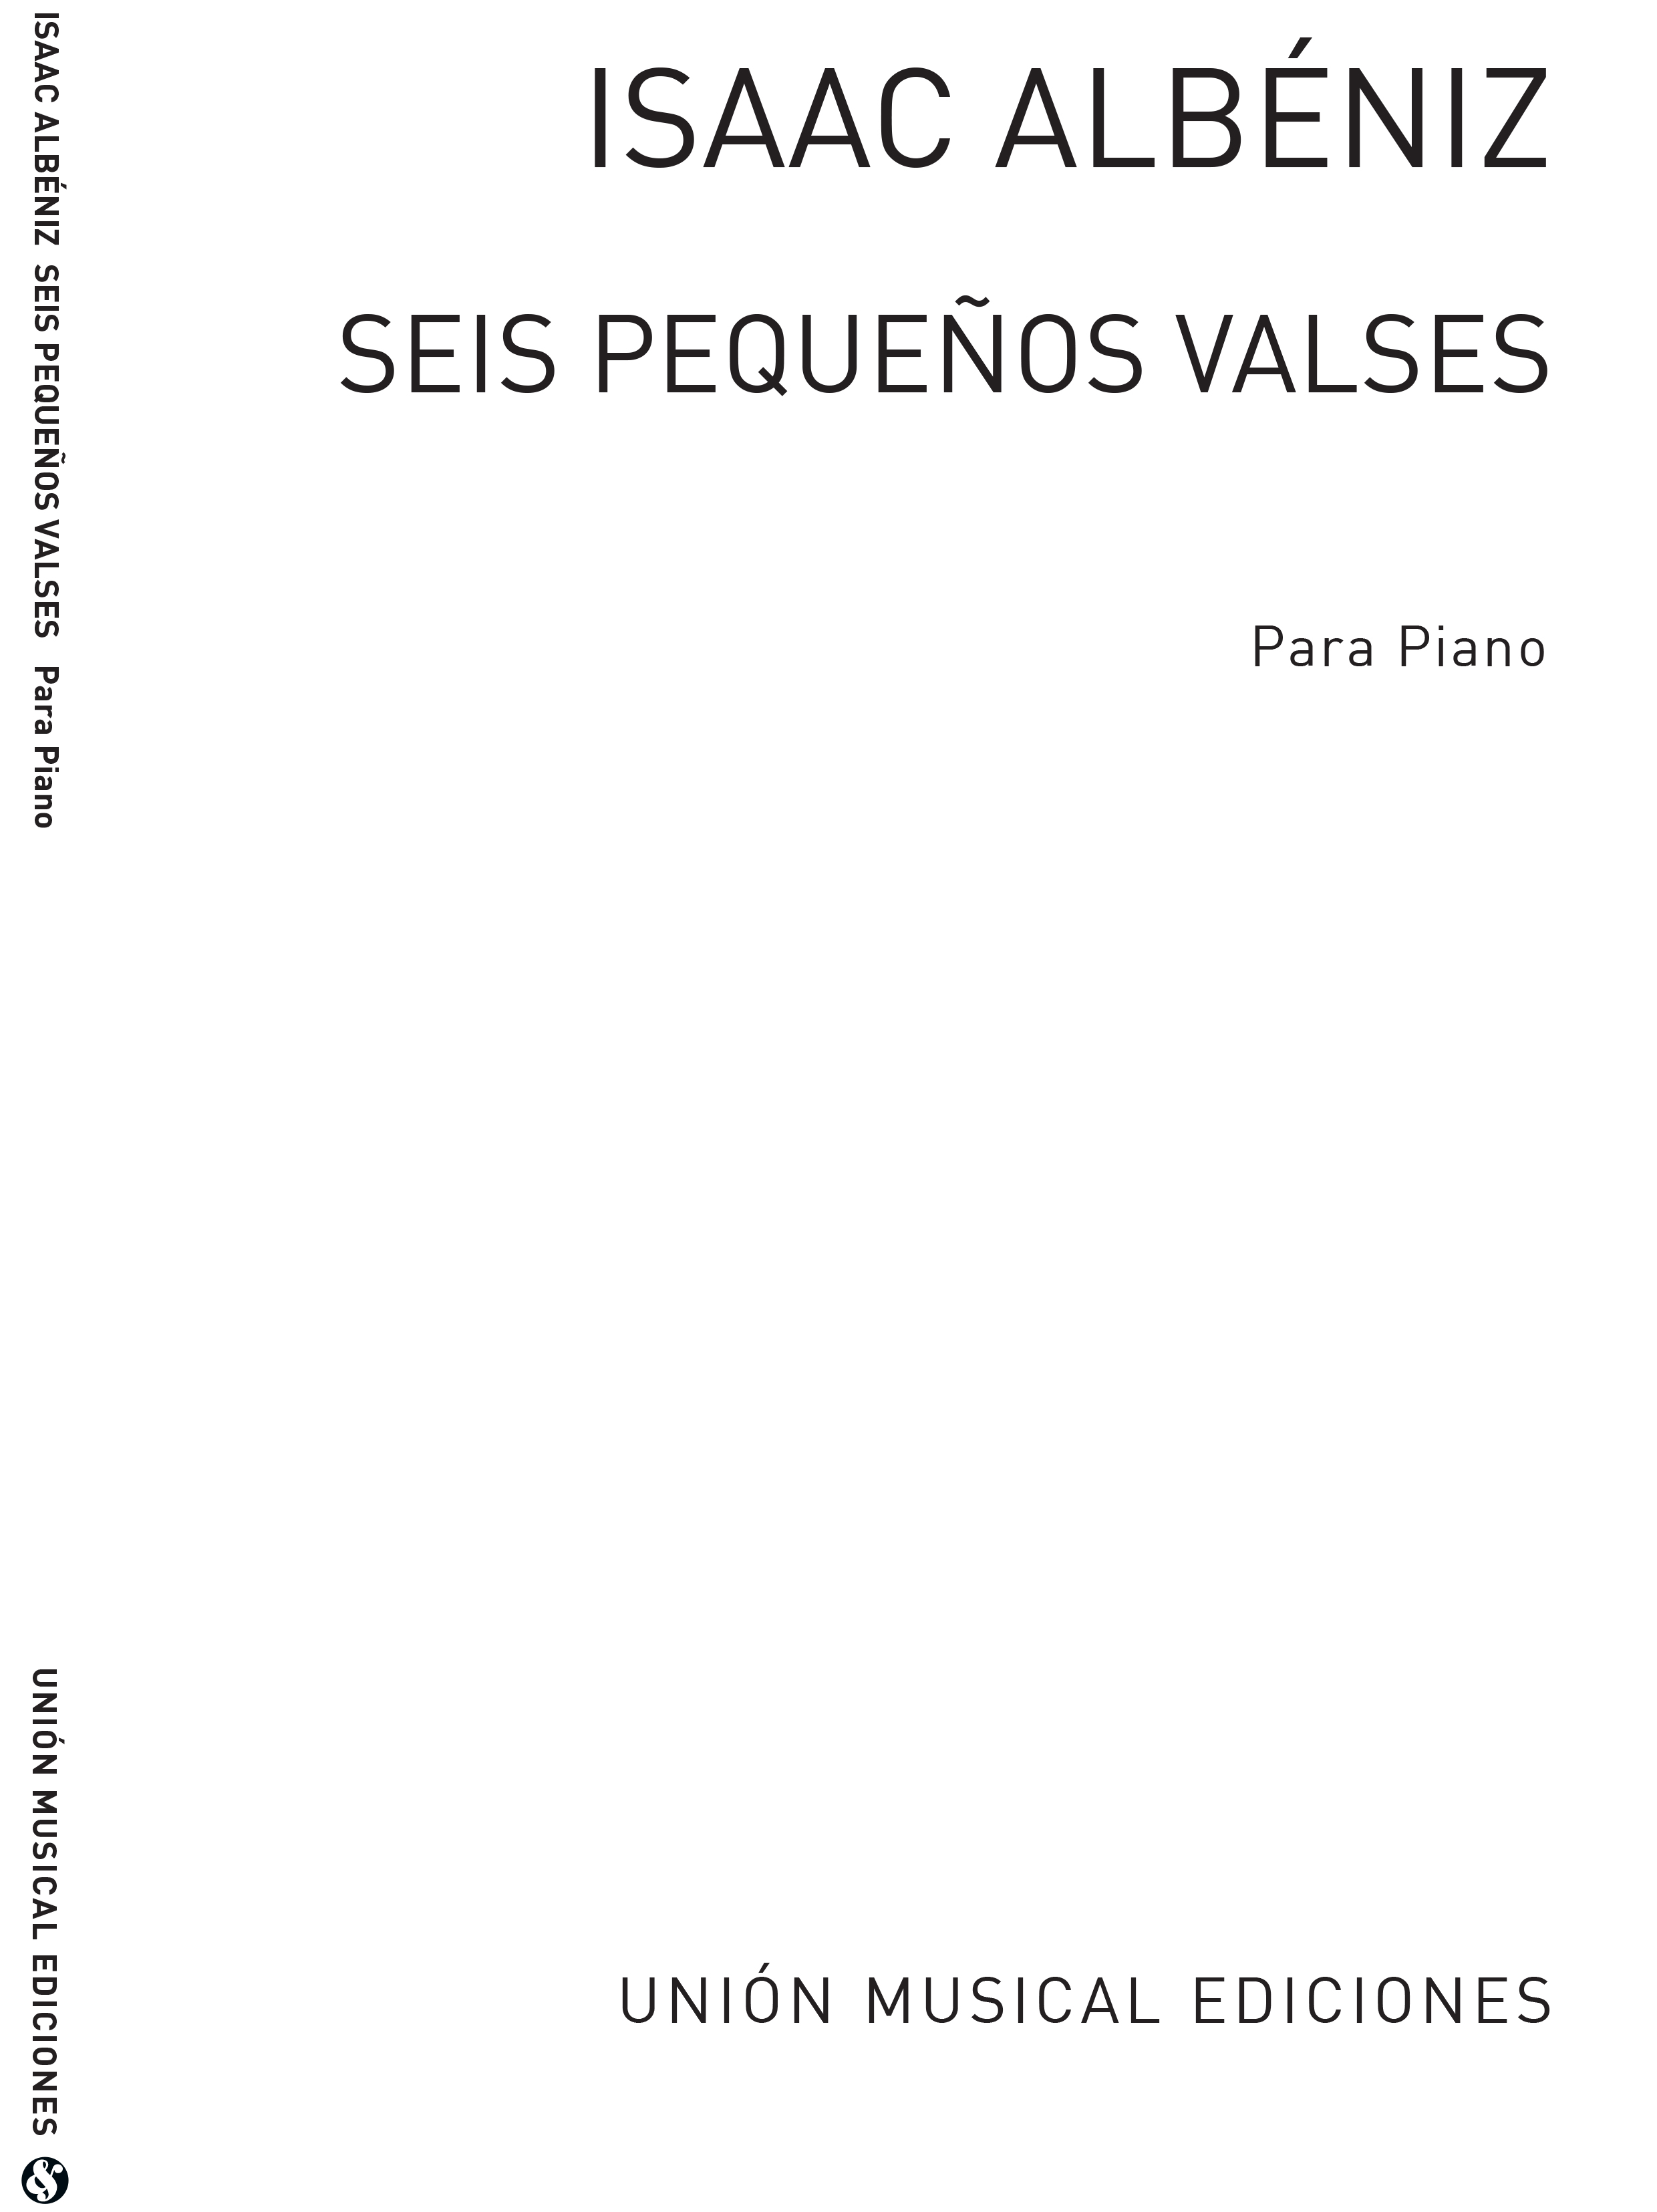 Isaac Albniz: Seis Pequenos Valses Op.25 Piano: Piano: Instrumental Album